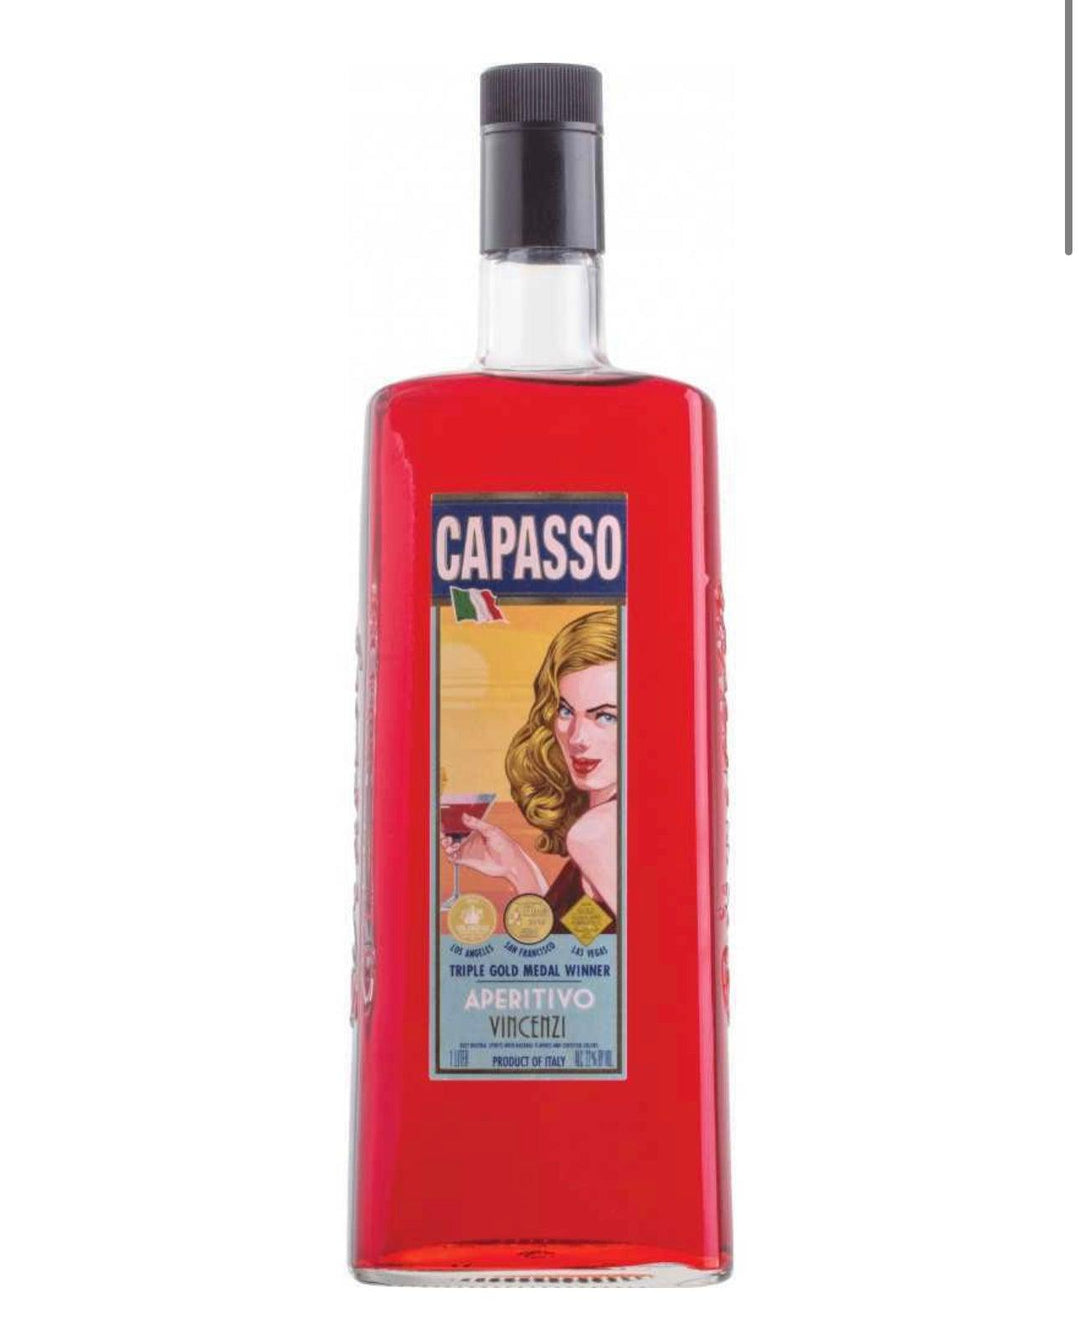 Aperitivo Vincenzi Capasso - Liquor Luxe